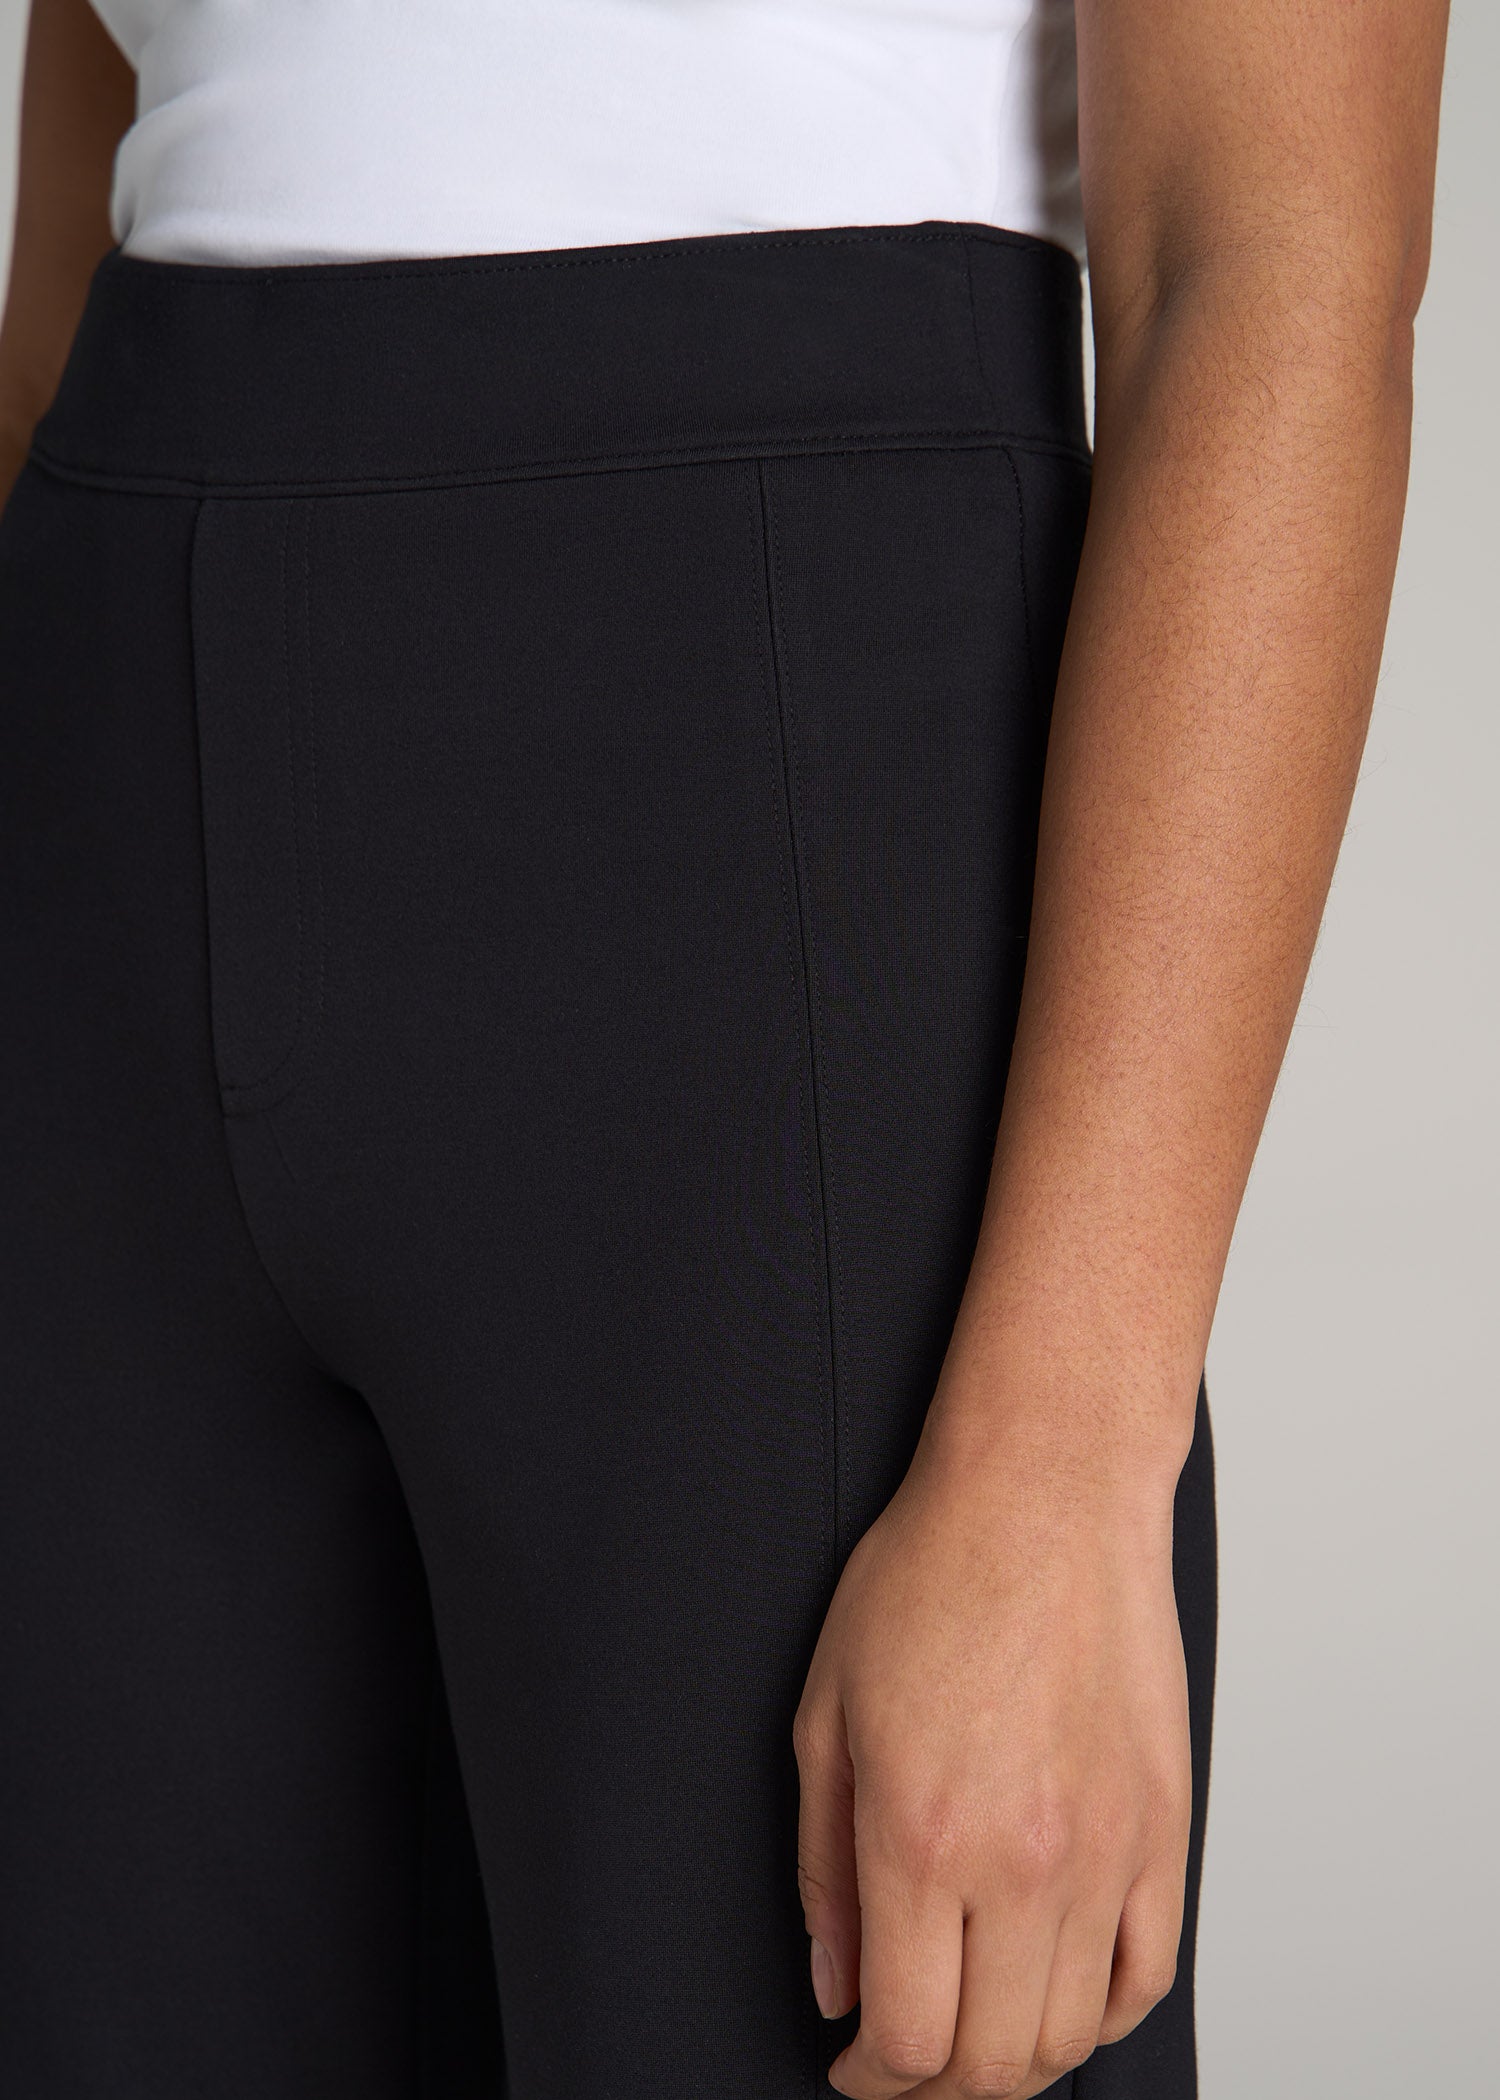 Pull-on Slim Dress Pants for Tall Women in Black